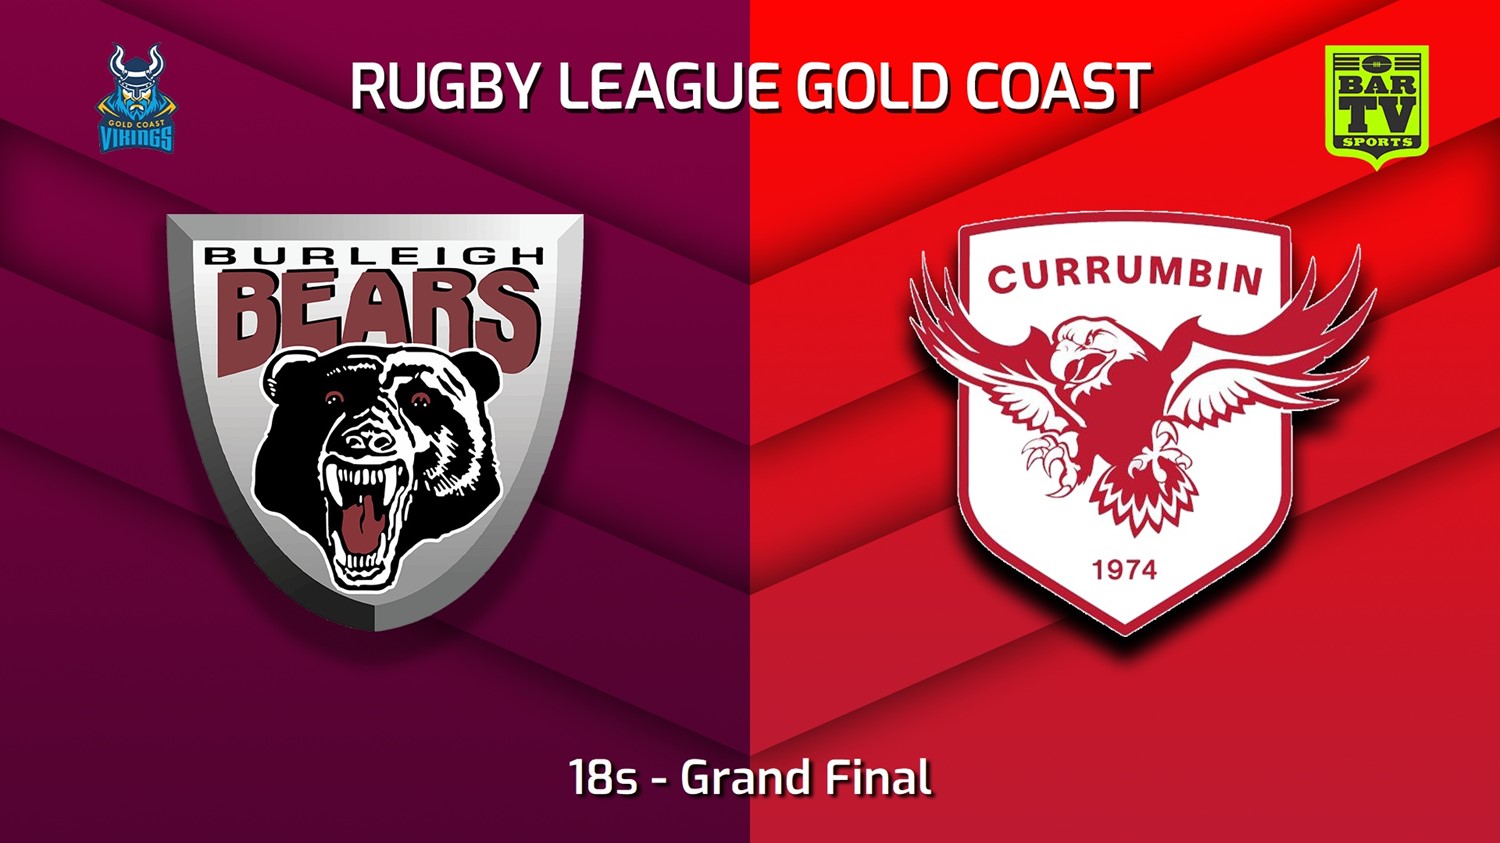 230910-Gold Coast Grand Final - 18s - Burleigh Bears v Currumbin Eagles Slate Image